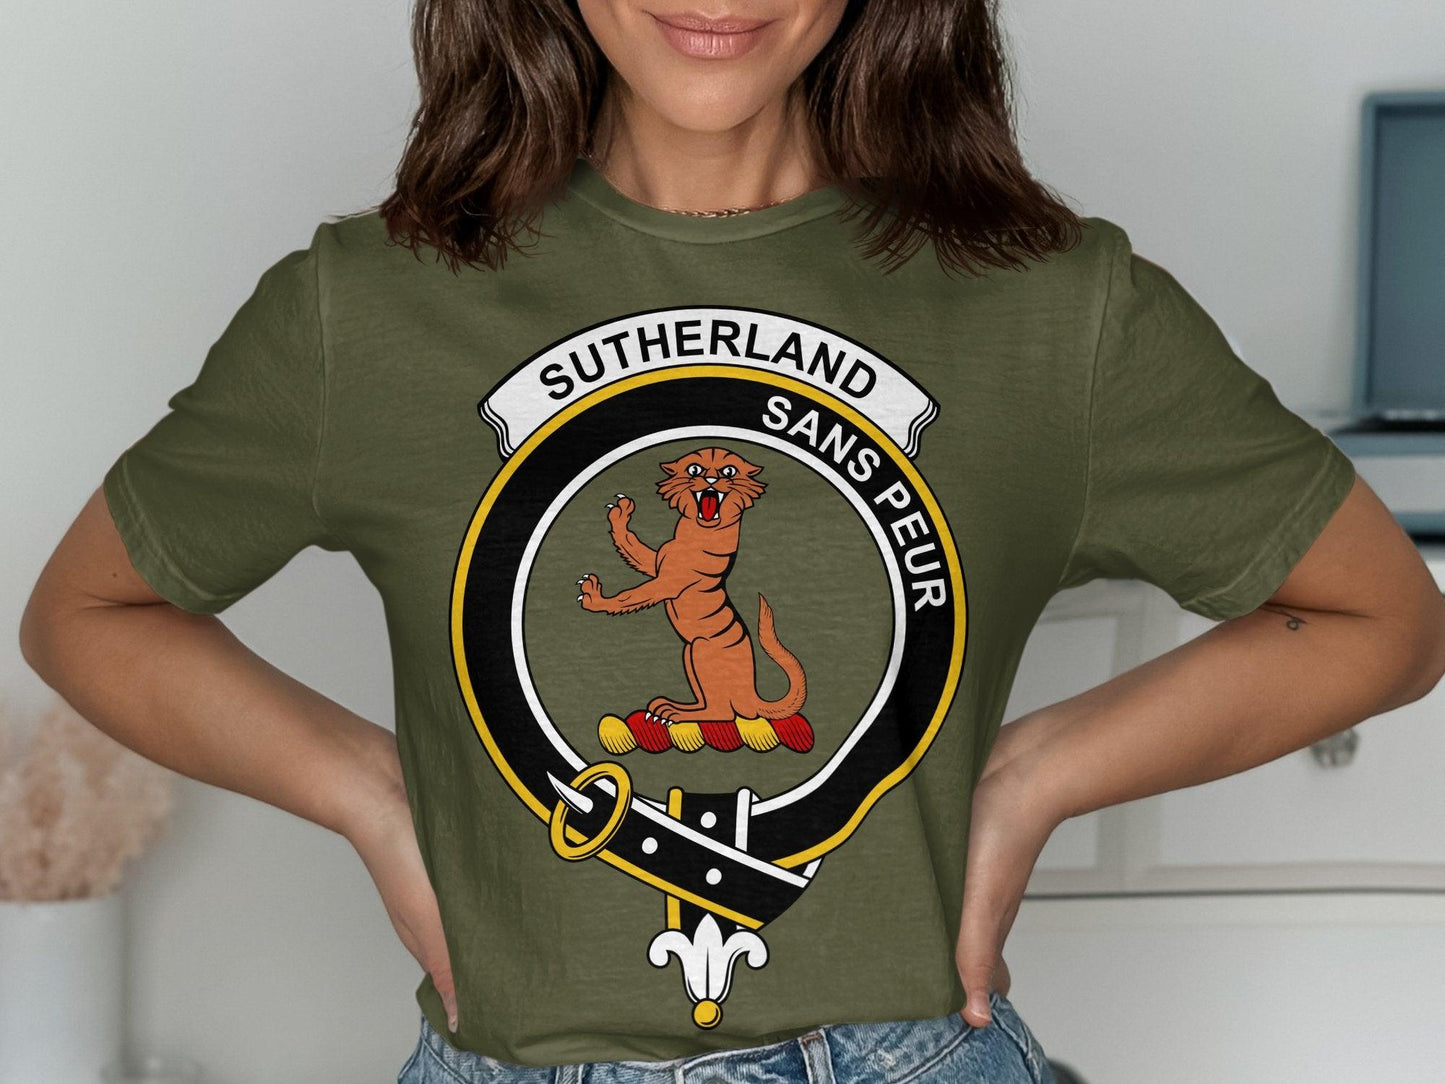 Scottish Sutherland Clan Crest Sans Peur T-Shirt - Living Stone Gifts